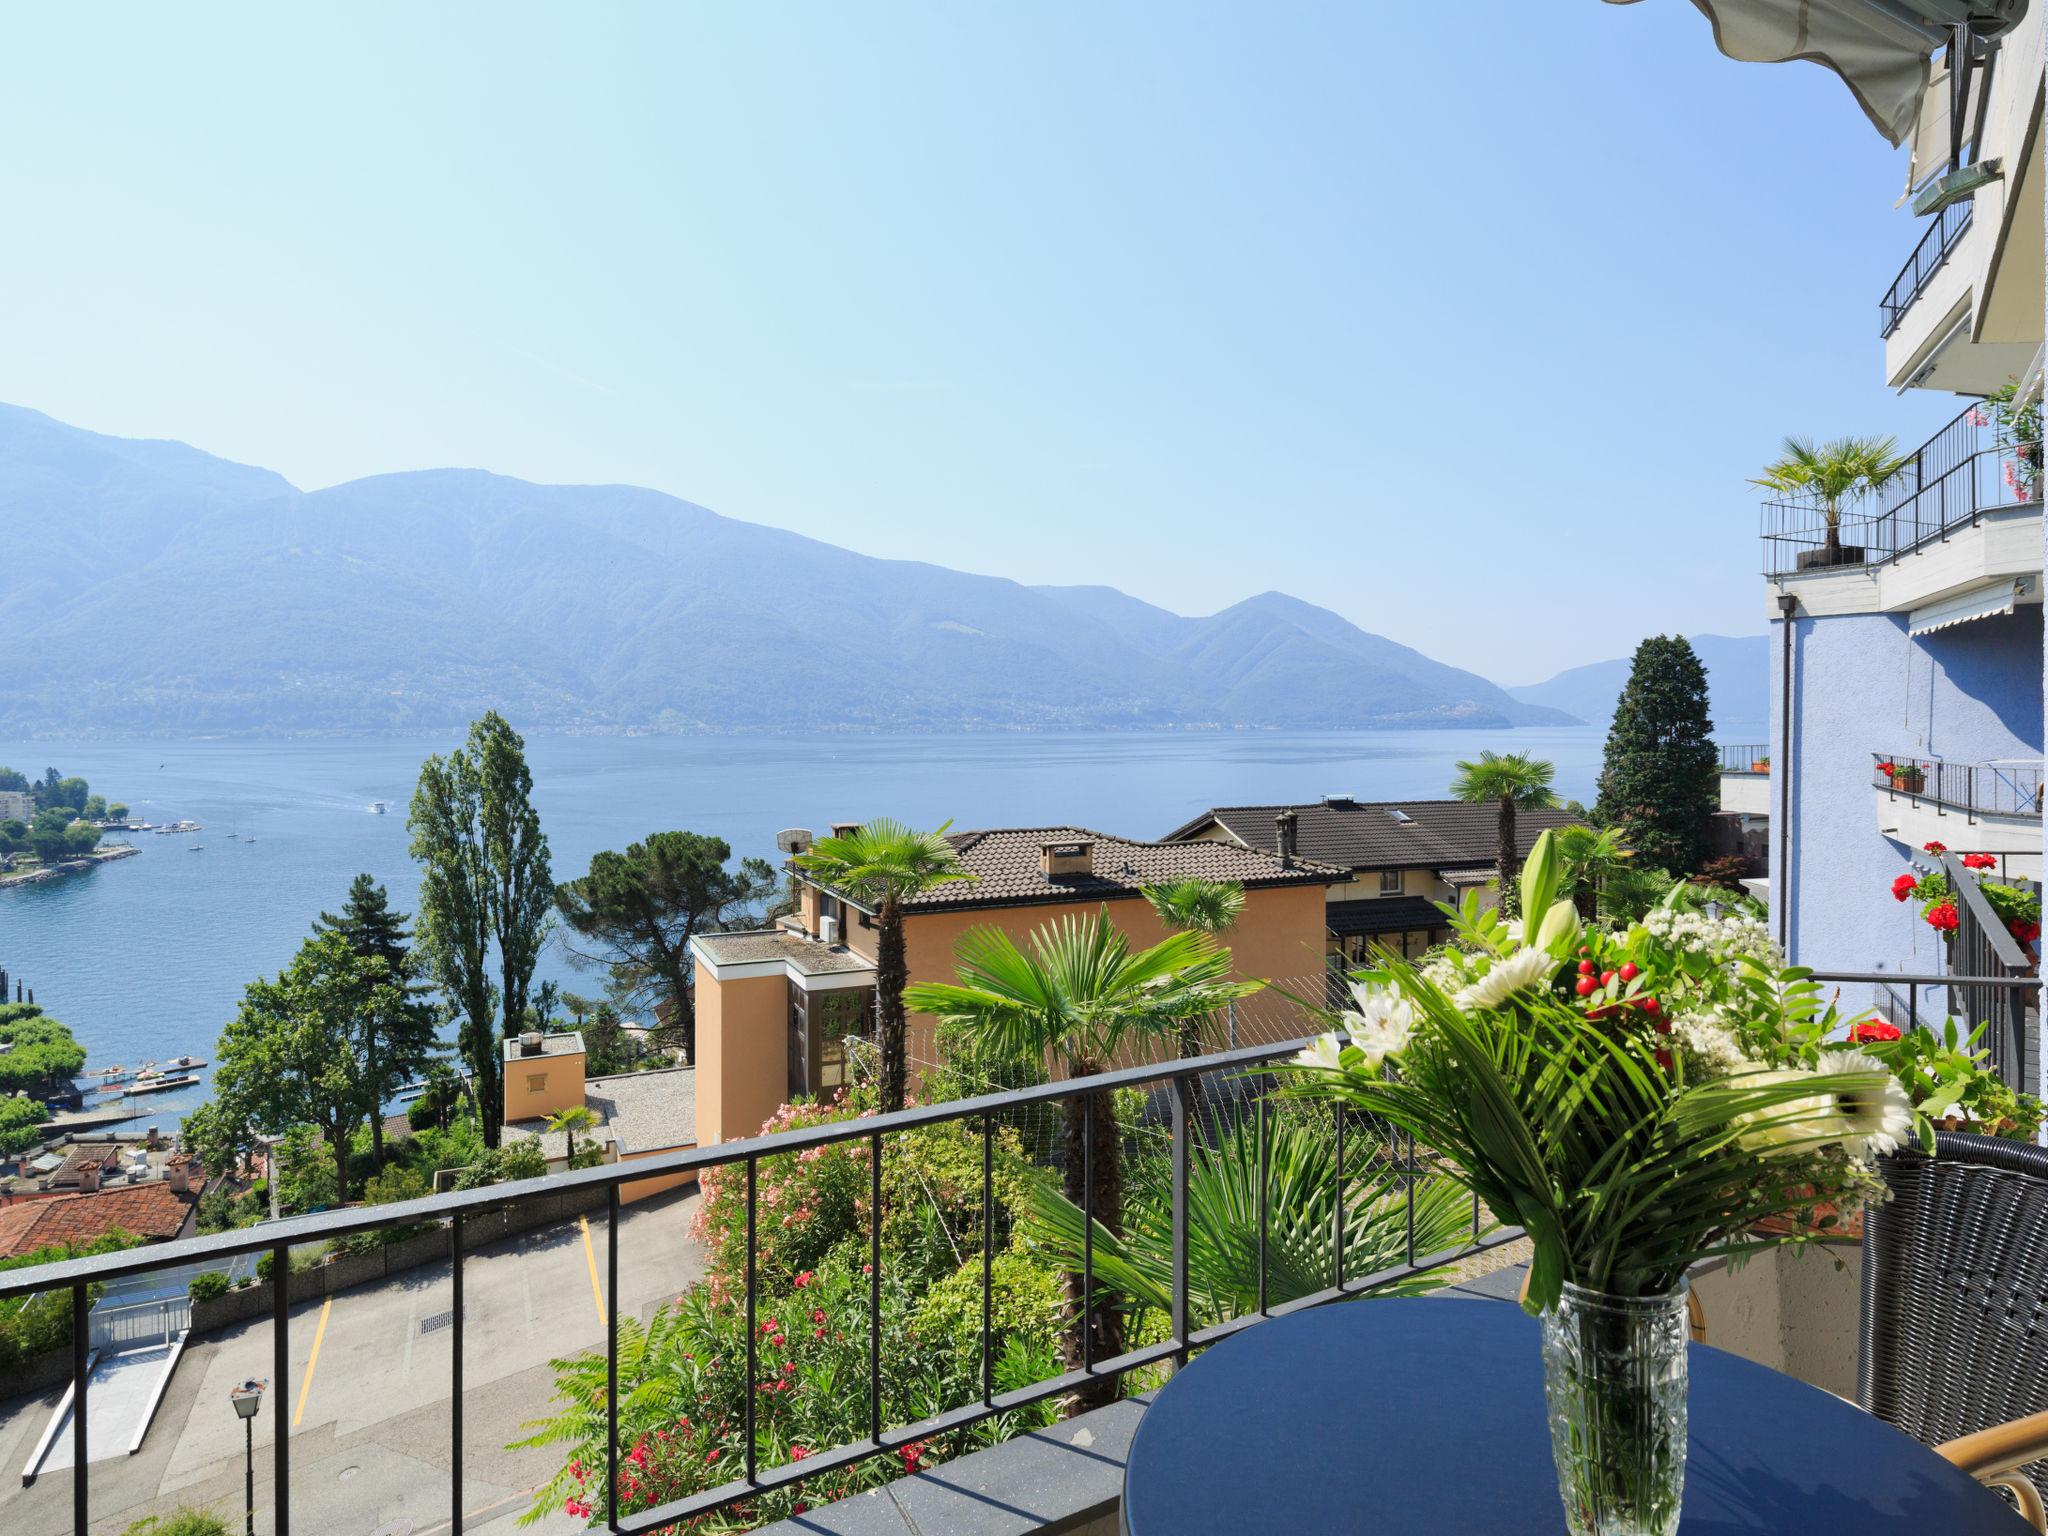 Foto 13 - Apartment in Ascona mit blick auf die berge